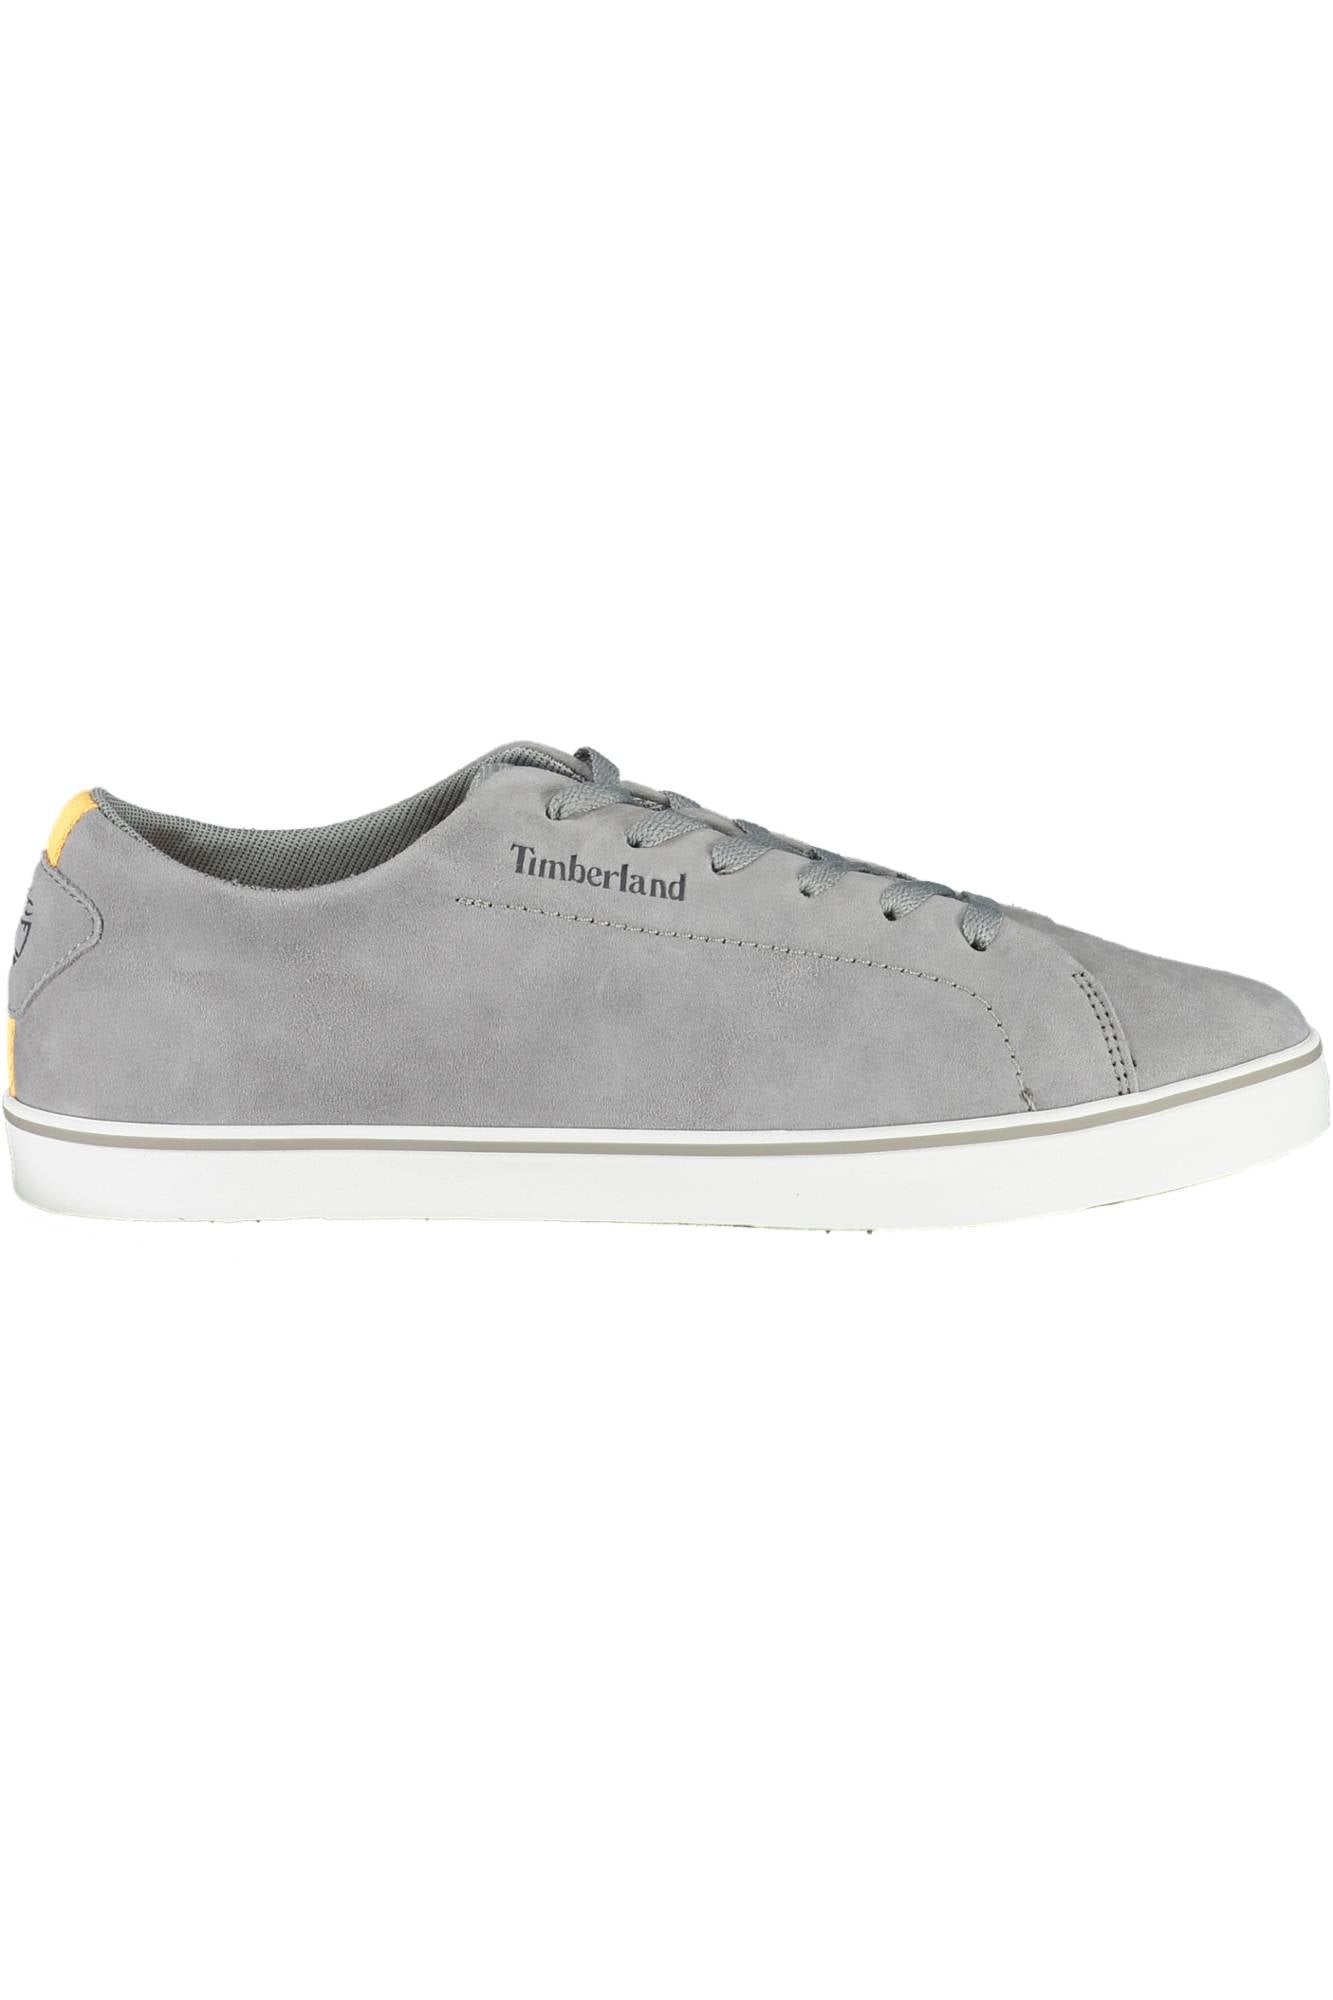 Timberland Gray Leather Sneaker - Fizigo